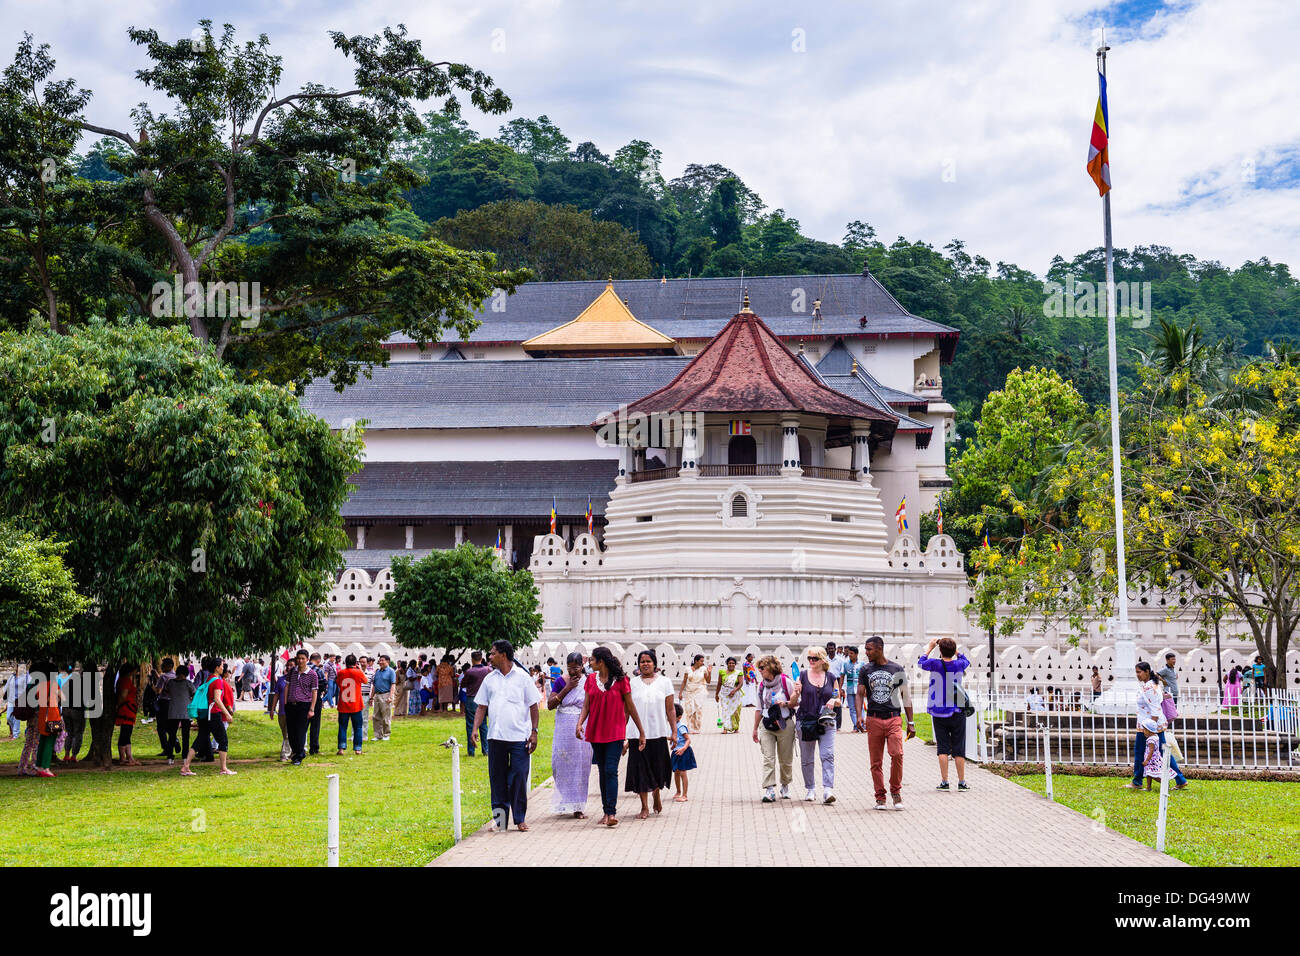 Les personnes qui désirent visiter le Temple de la Dent sacrée (Sri Dalada Maligawa), site de l'UNESCO, Kandy, Sri Lanka Banque D'Images